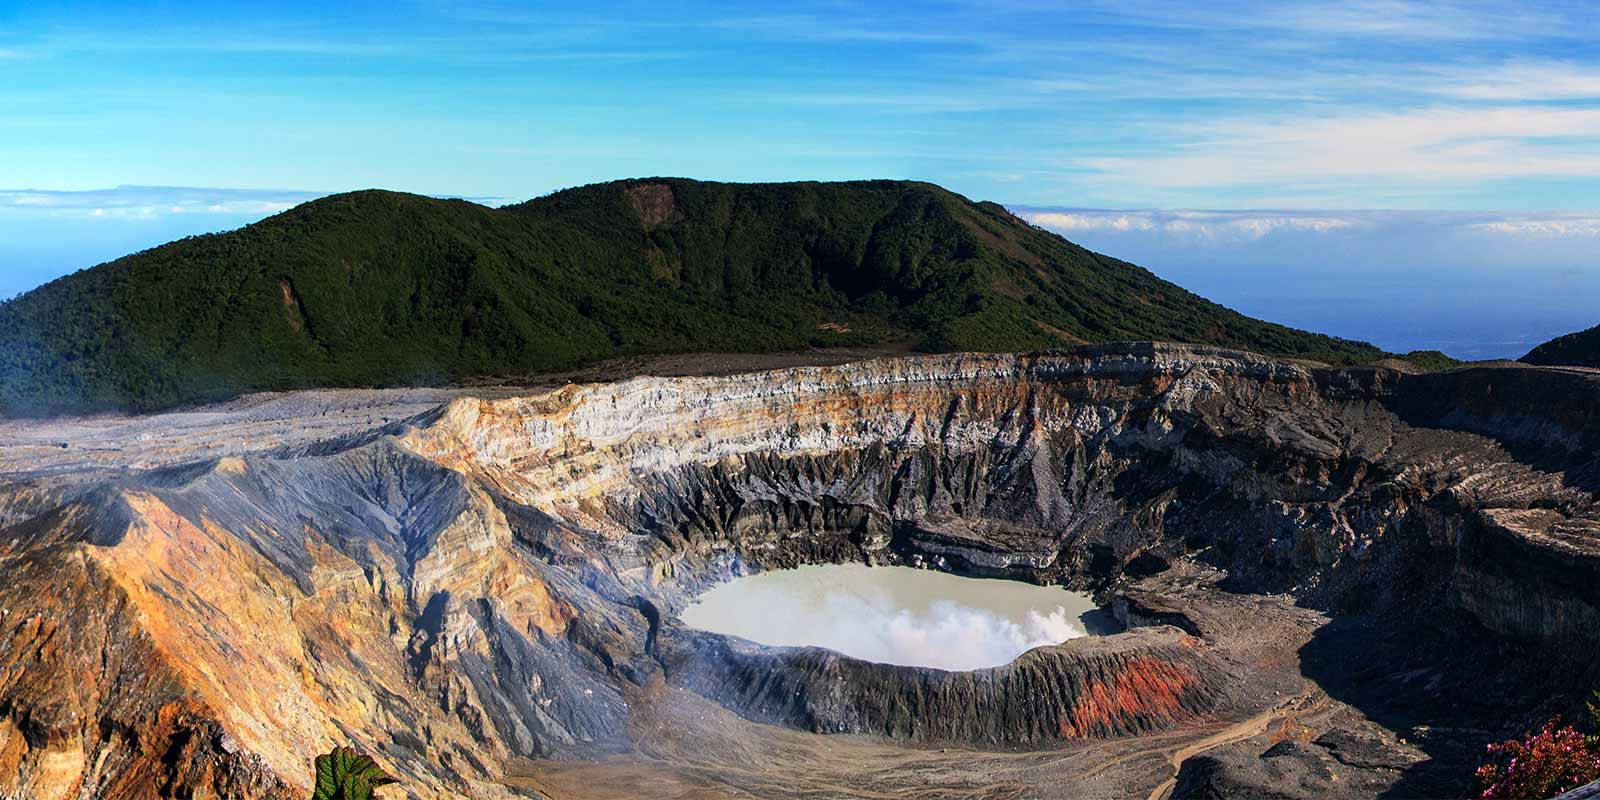 Crater of Poas Volcano